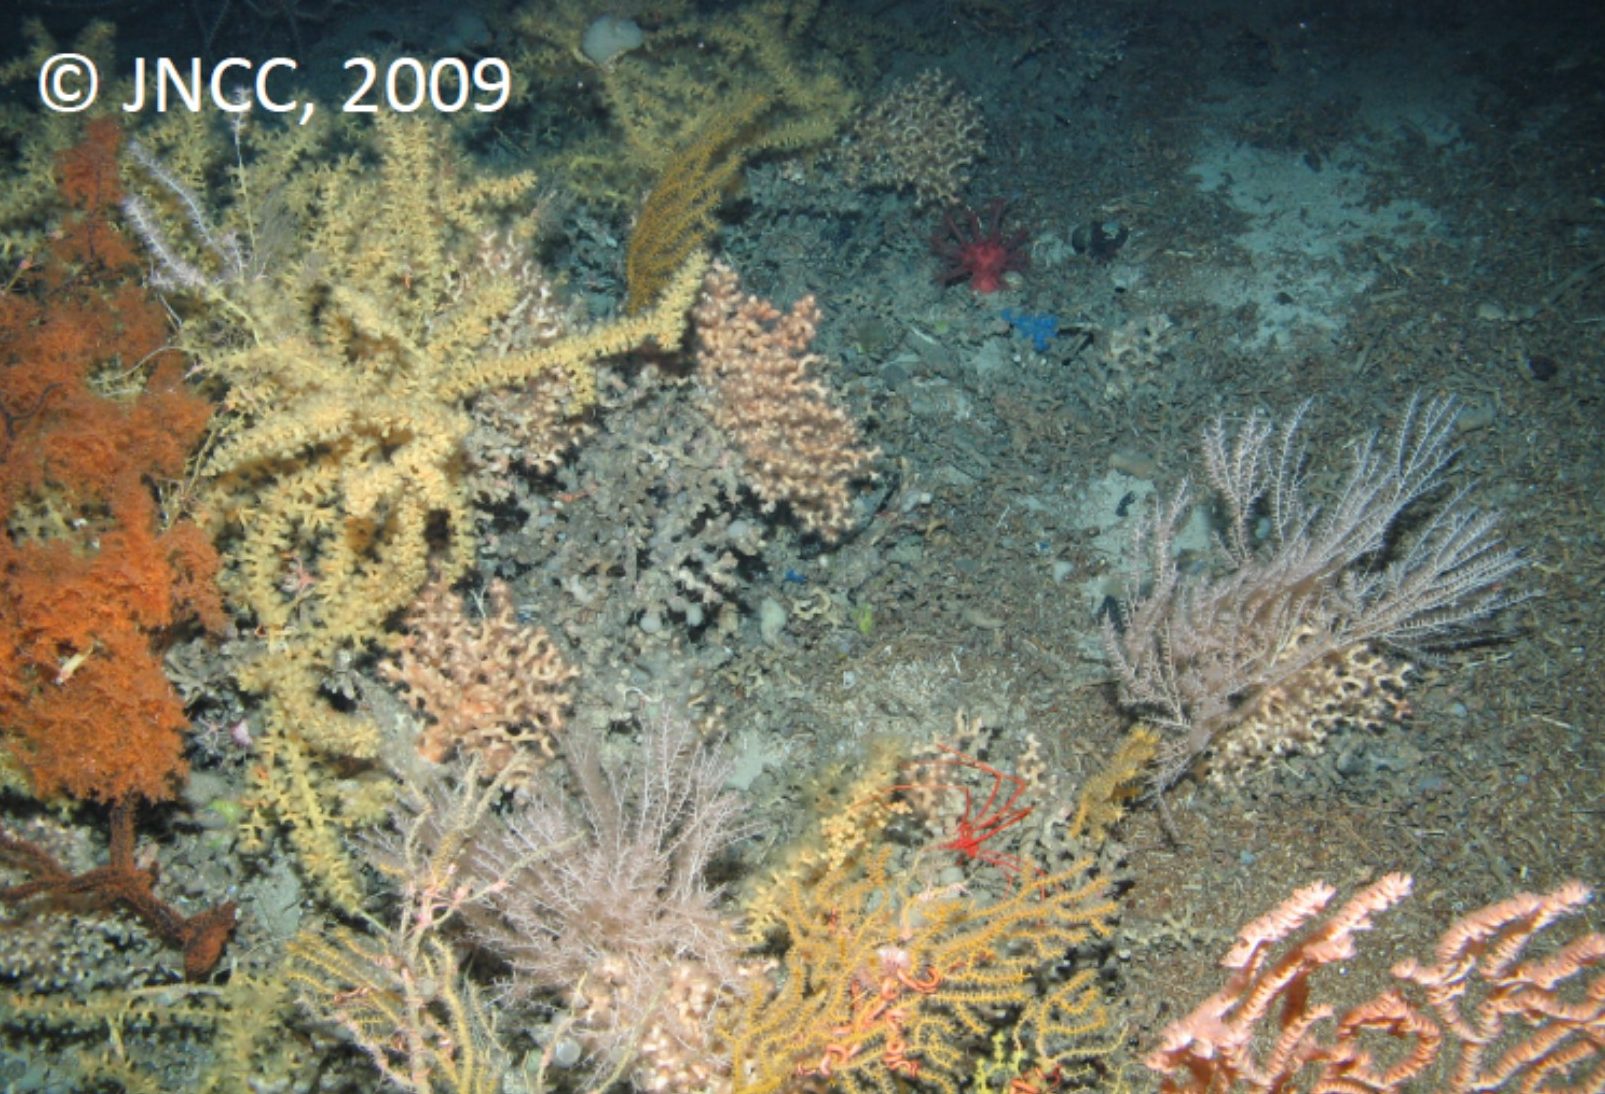 Mixed coral assemblage on Lophelia pertusa reef framework